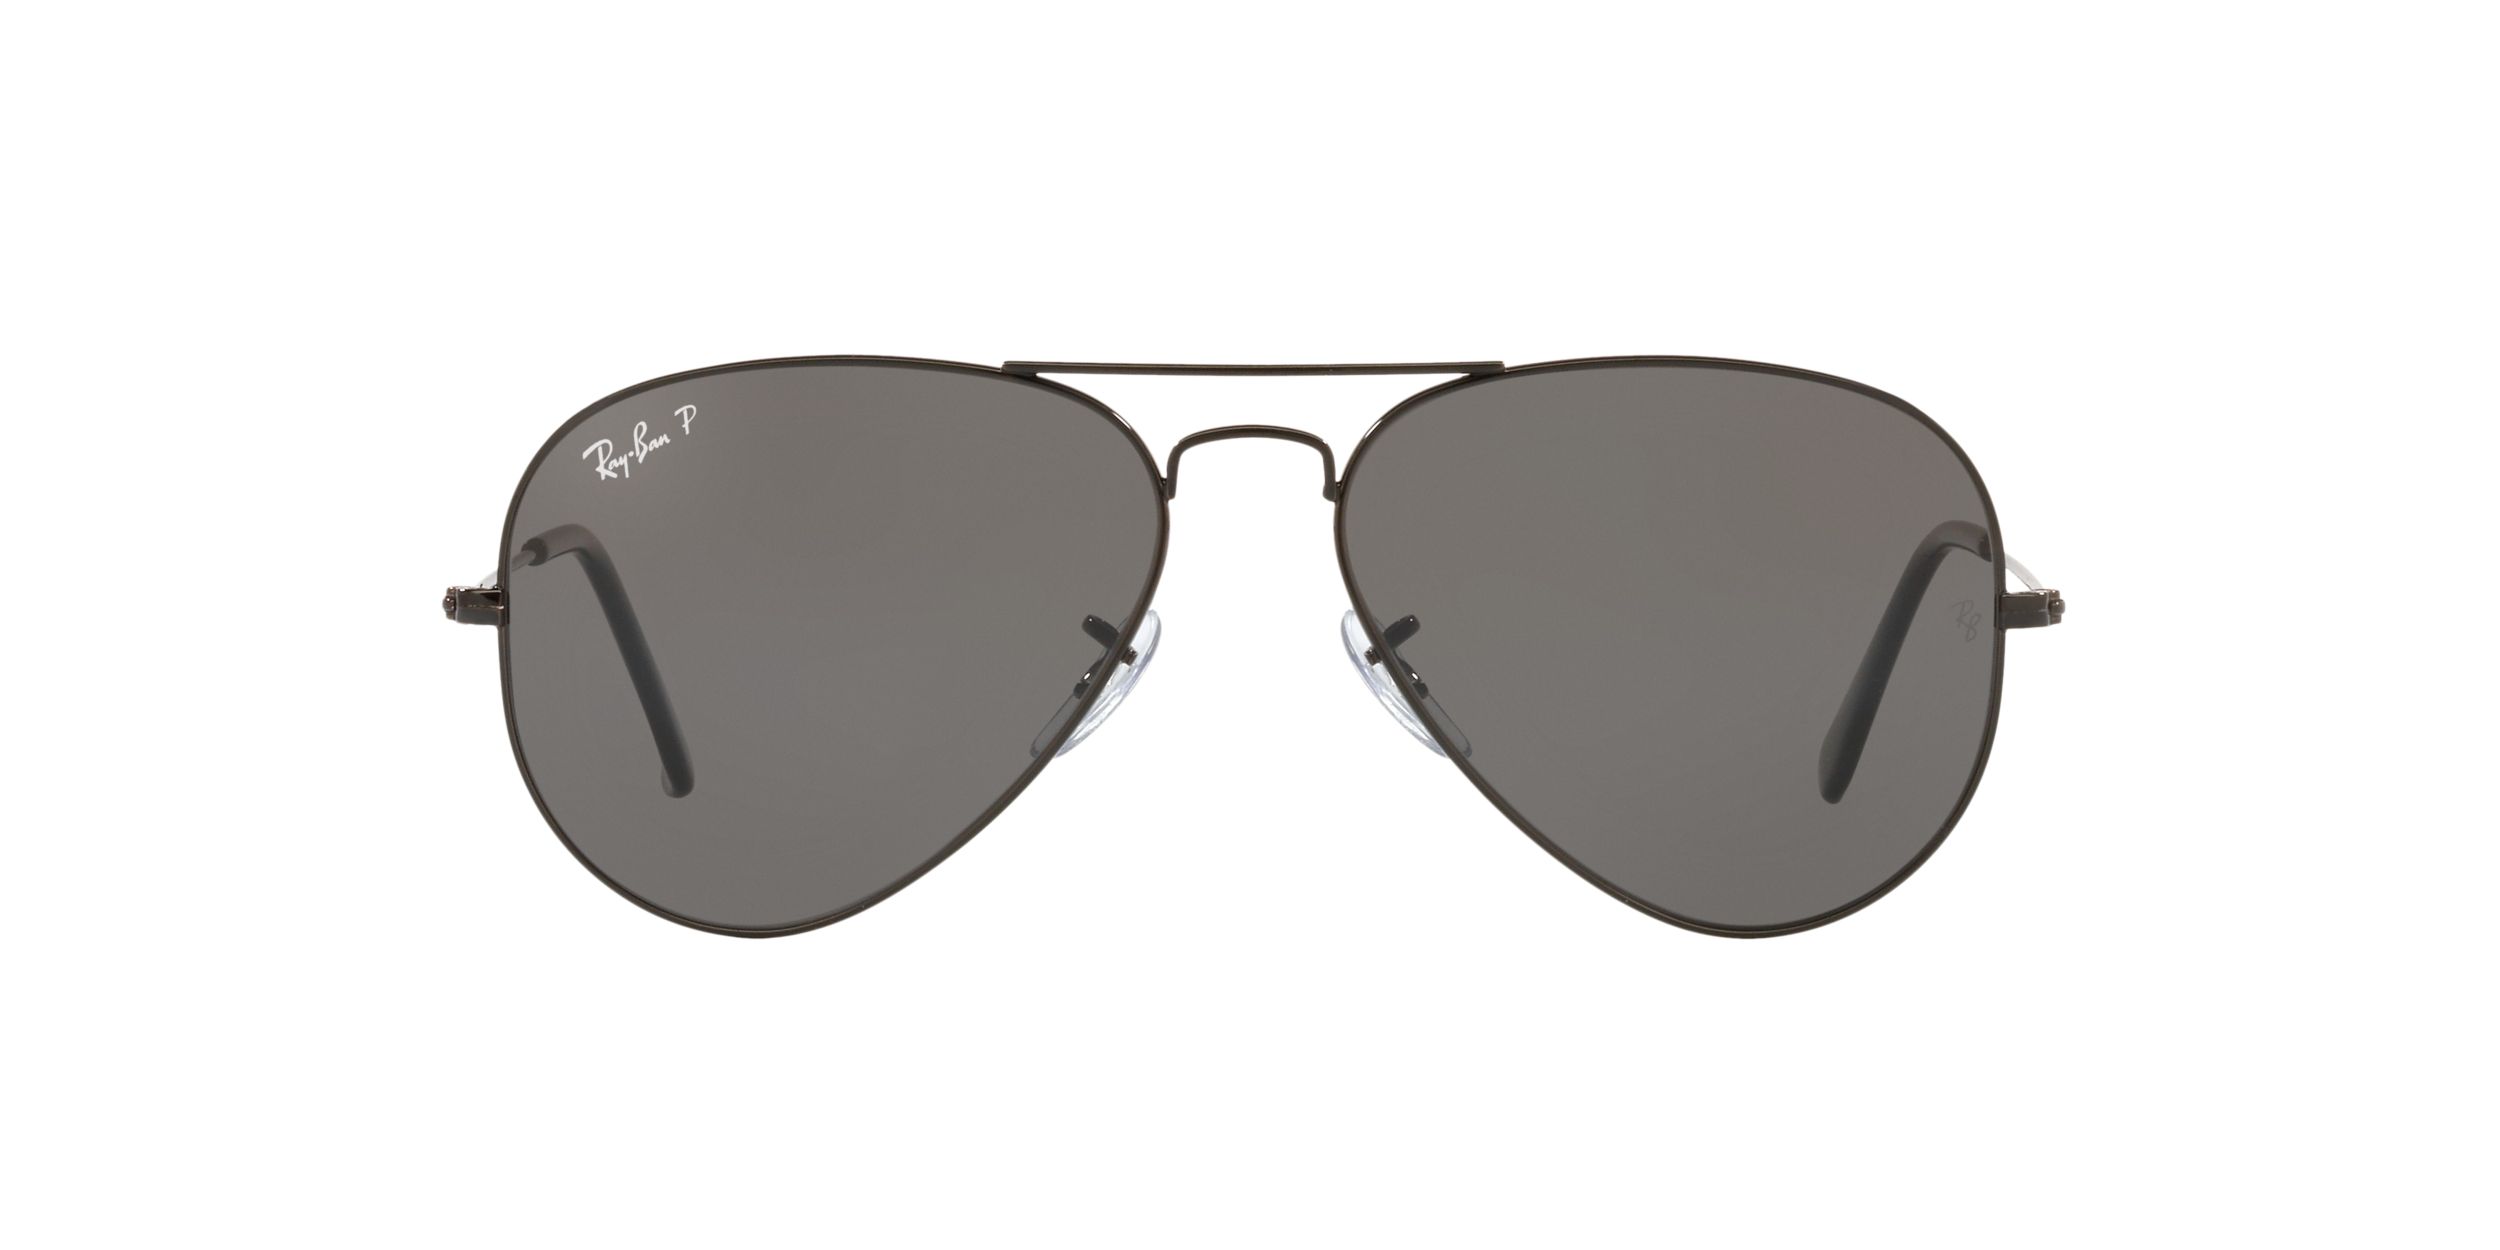 Image of Ray Ban Men's/Women's Aviator Sunglasses Polarized